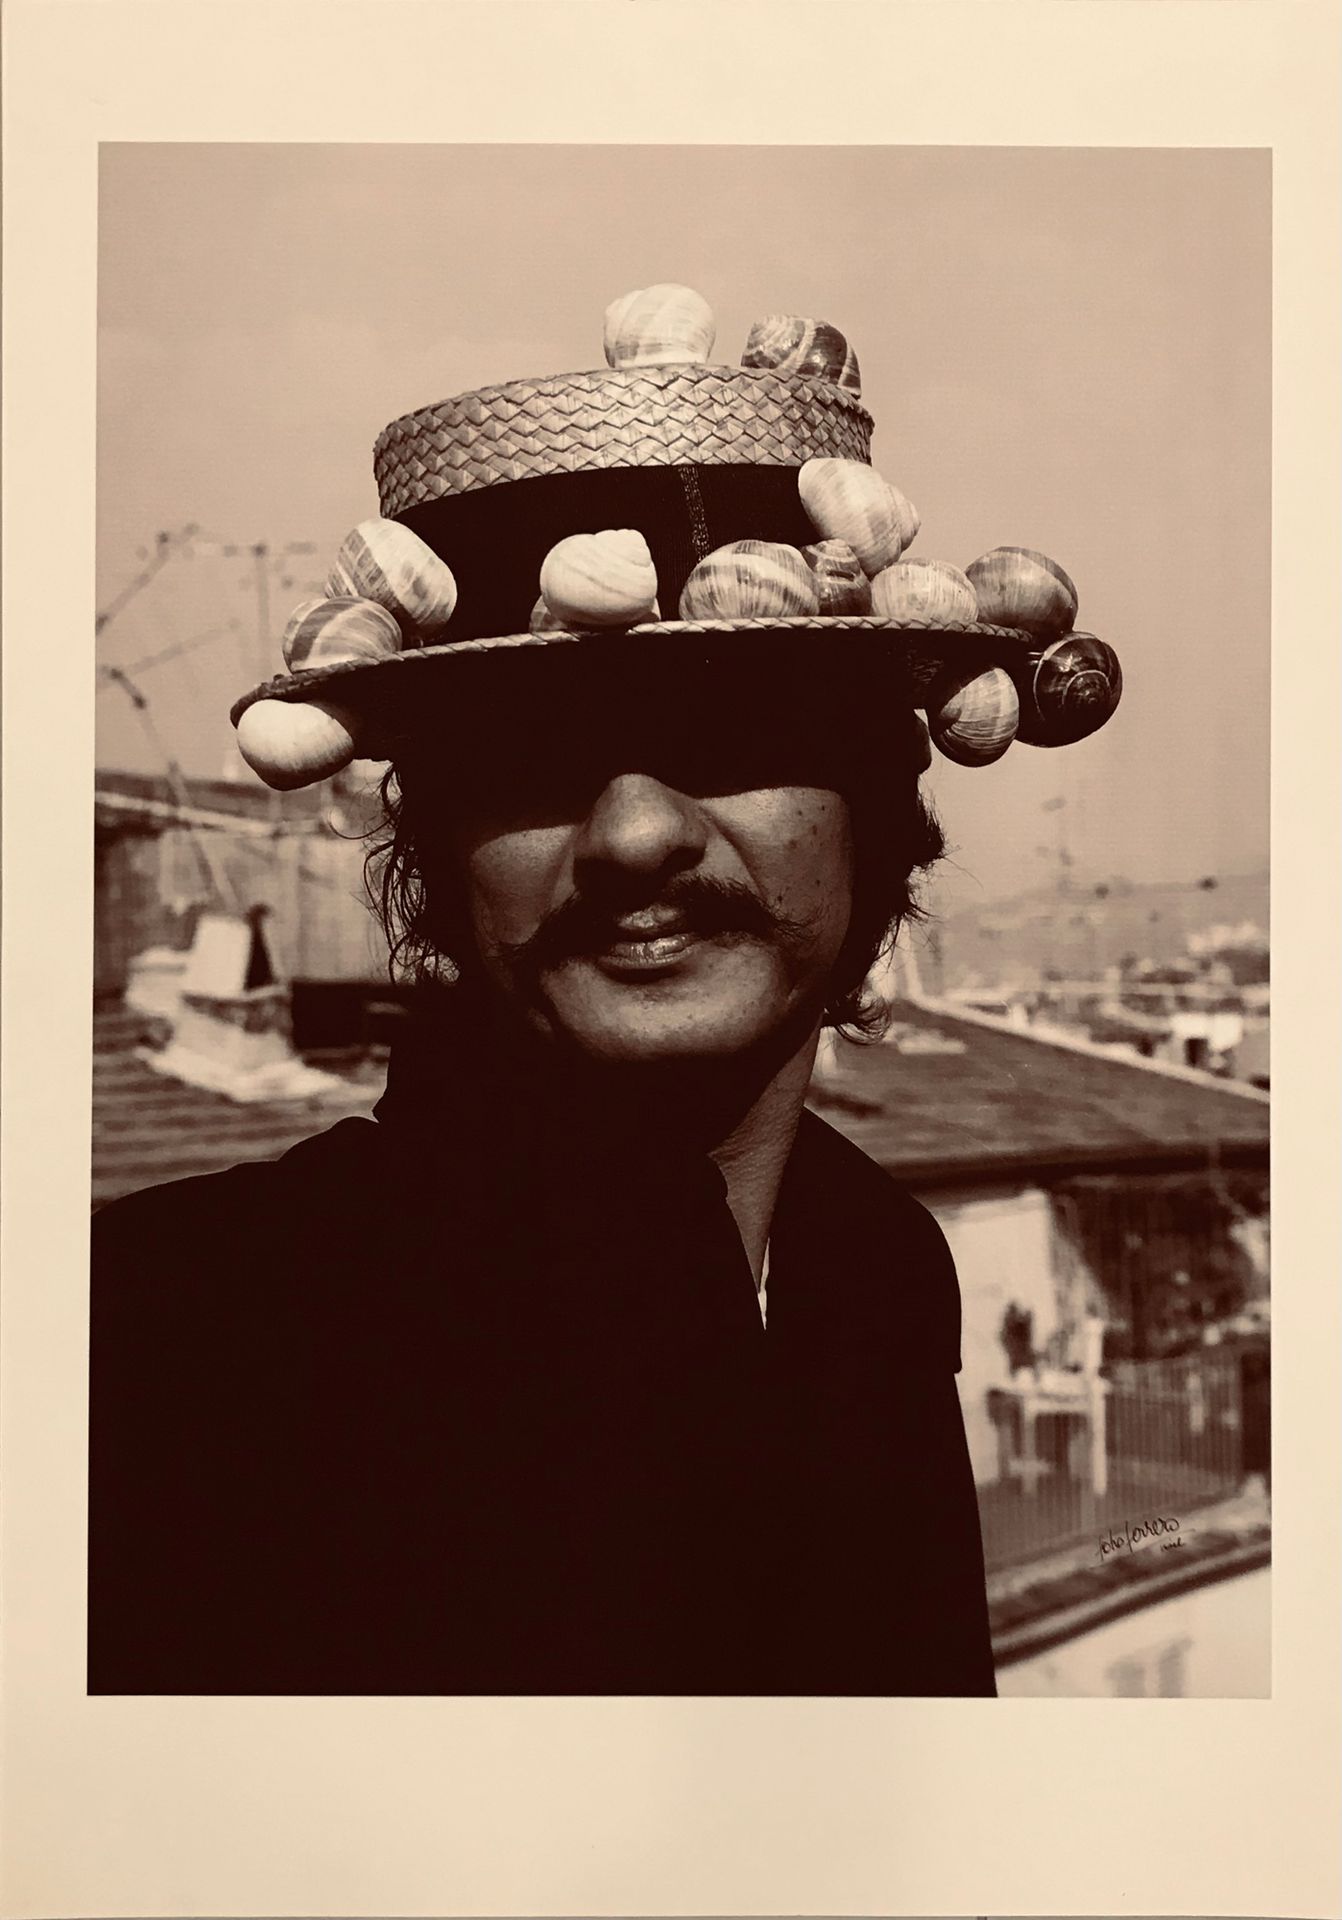 [GILLI] Jean FERRERO Portrait of Claude Gilli with snail hat, circa 1970
Photogr&hellip;